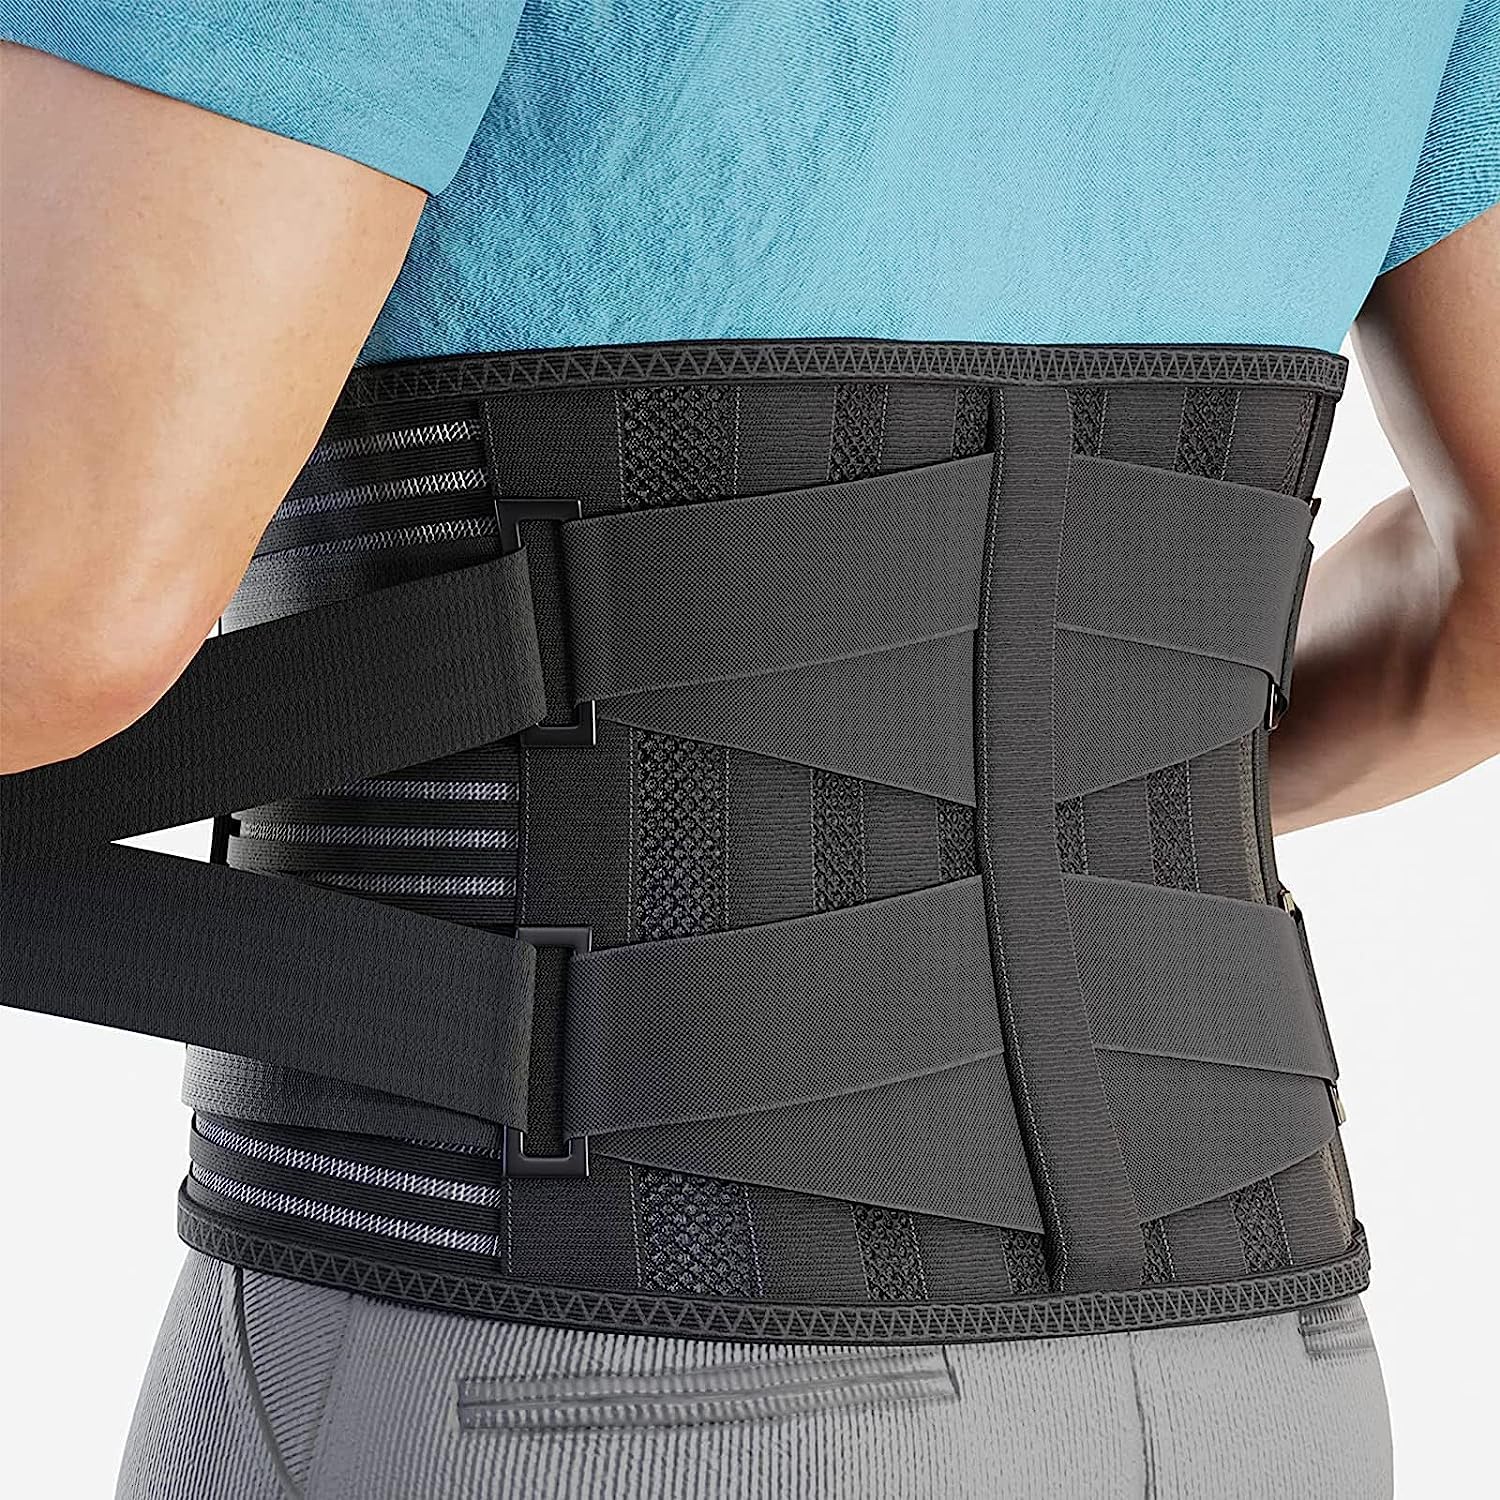 楽腰帯 腰部保護ベルト 骨盤補強 腹圧効果 腰痛対策 - その他